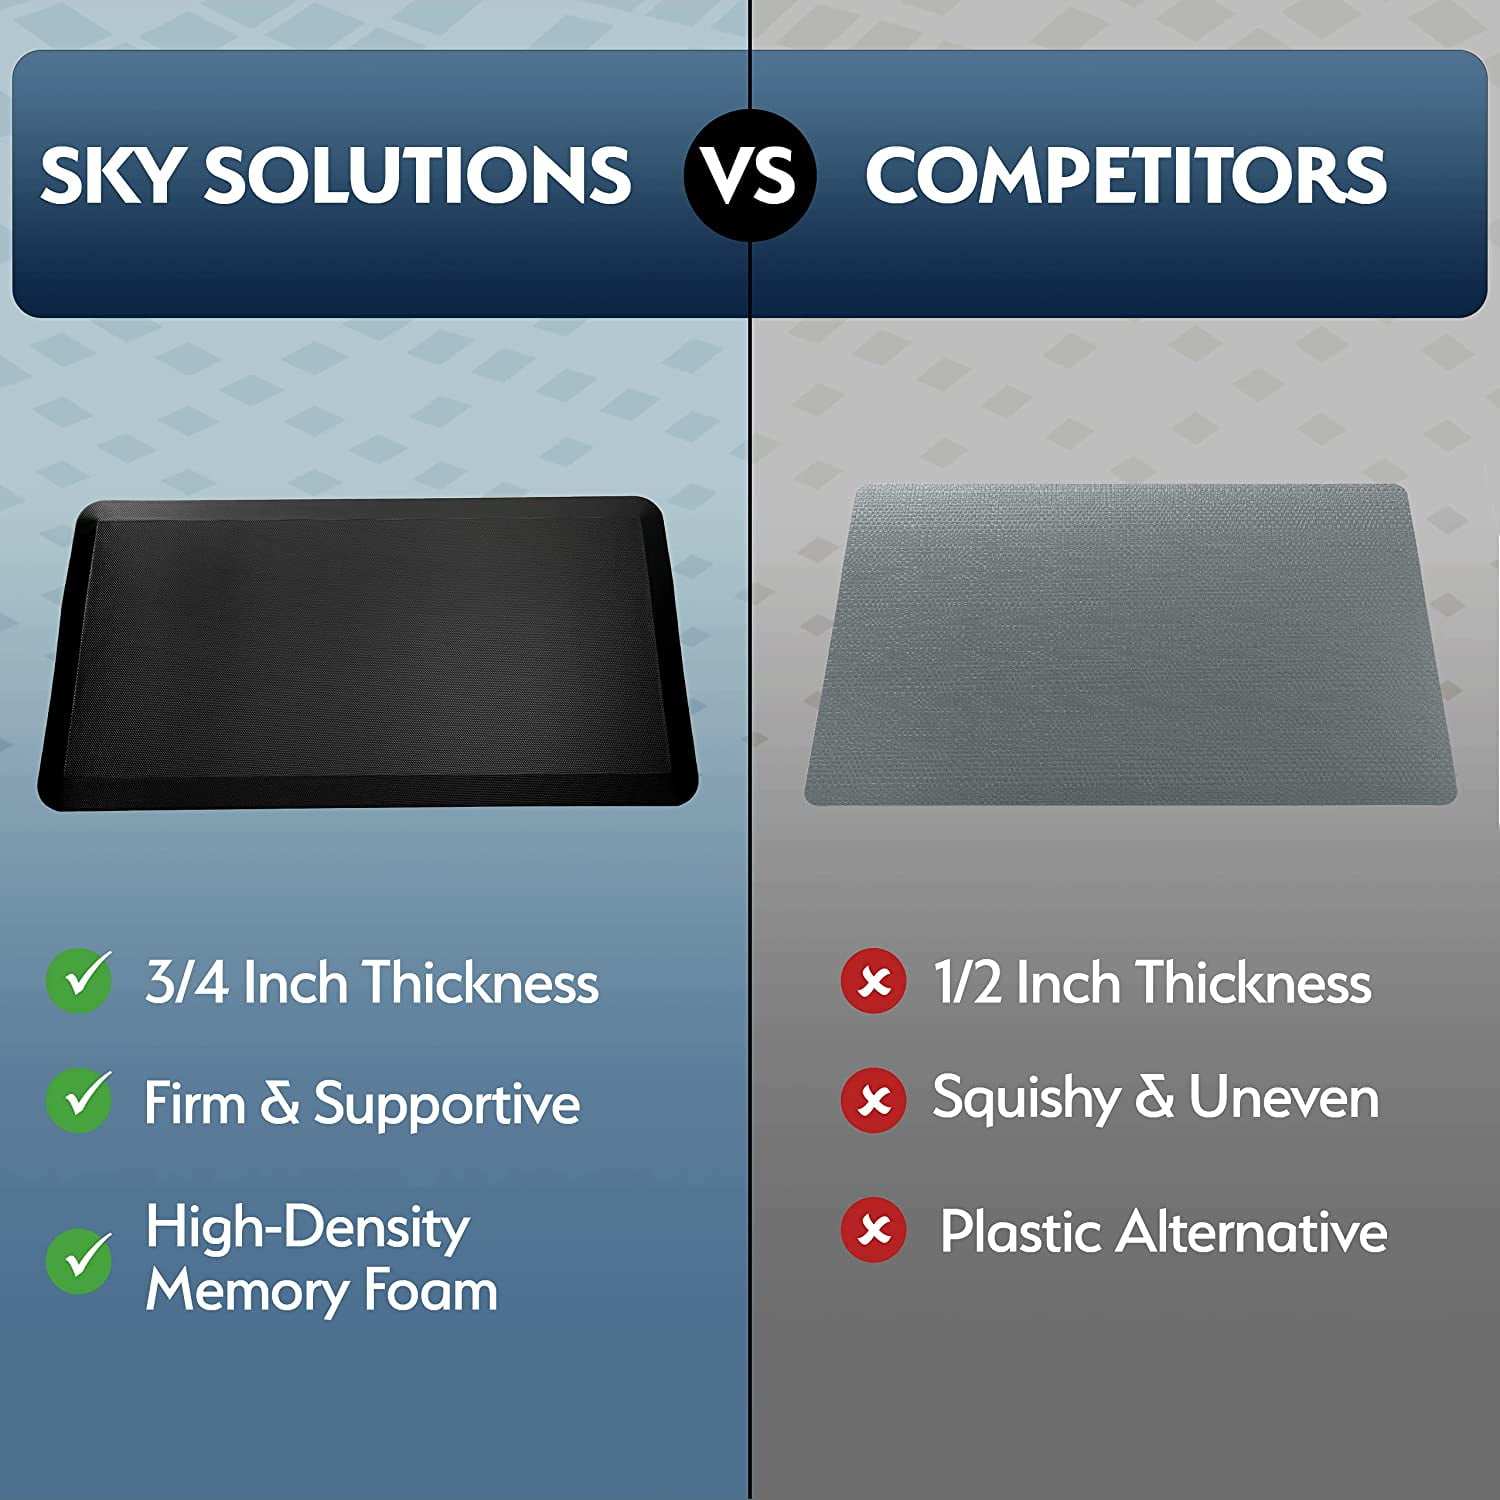 Sky Mats Anti Fatigue Comfort Floor Mat, 20 in x 39 Inches, Midnight Black